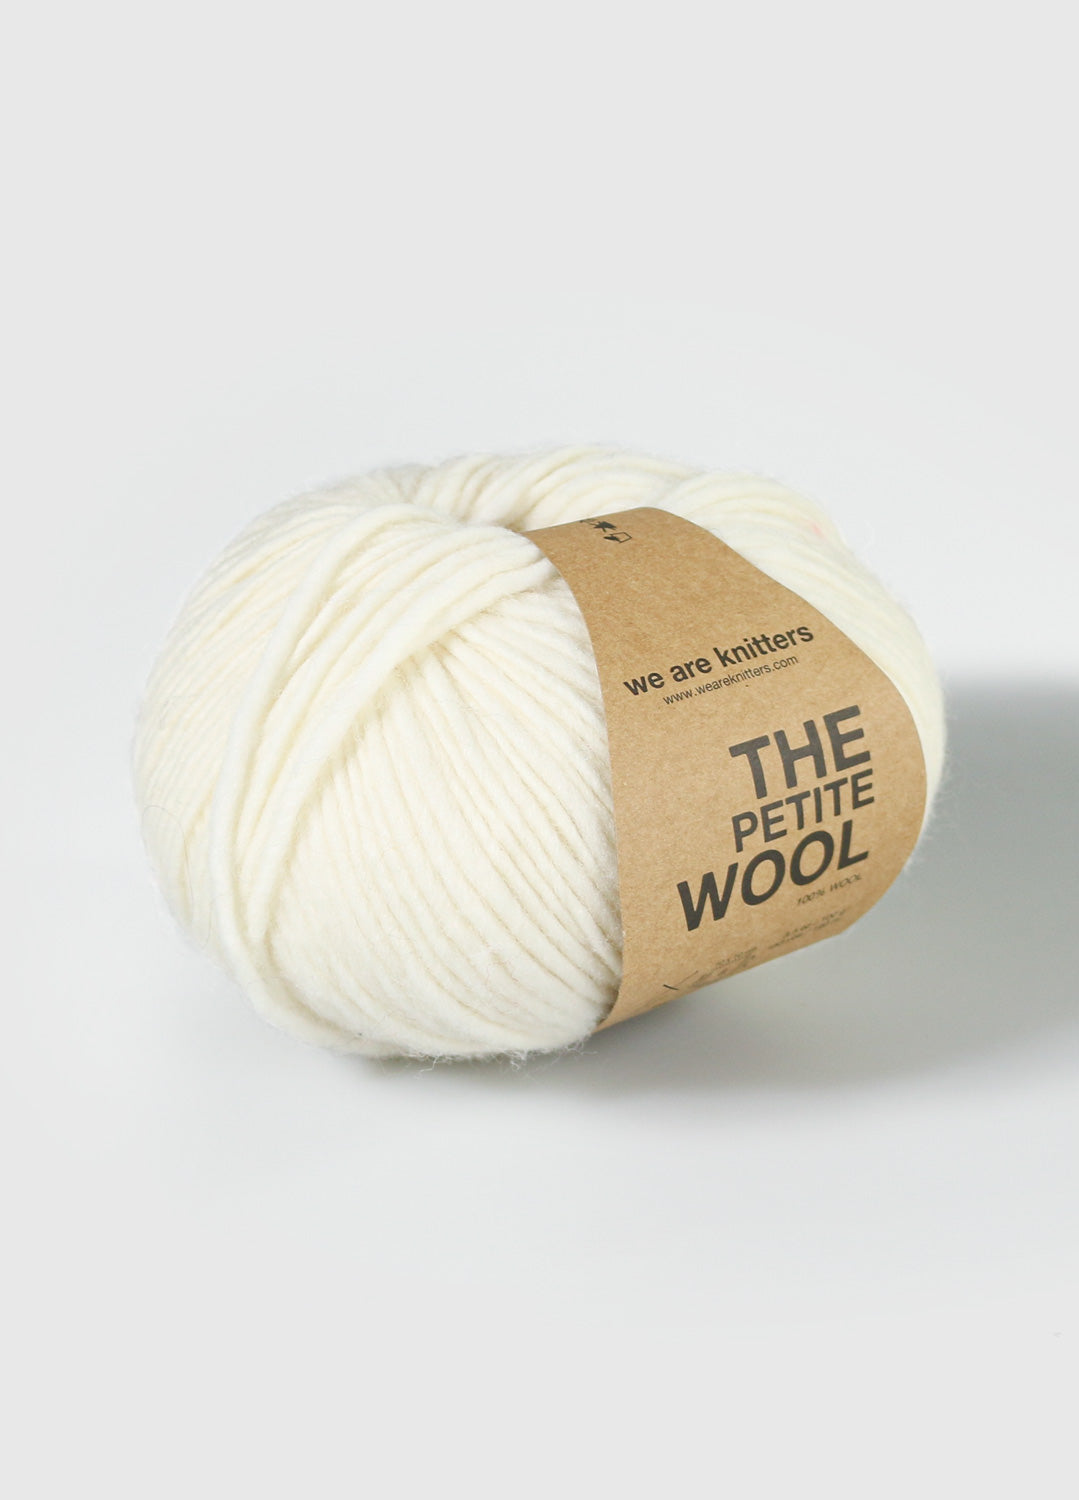 The Wool Taupe – weareknitters